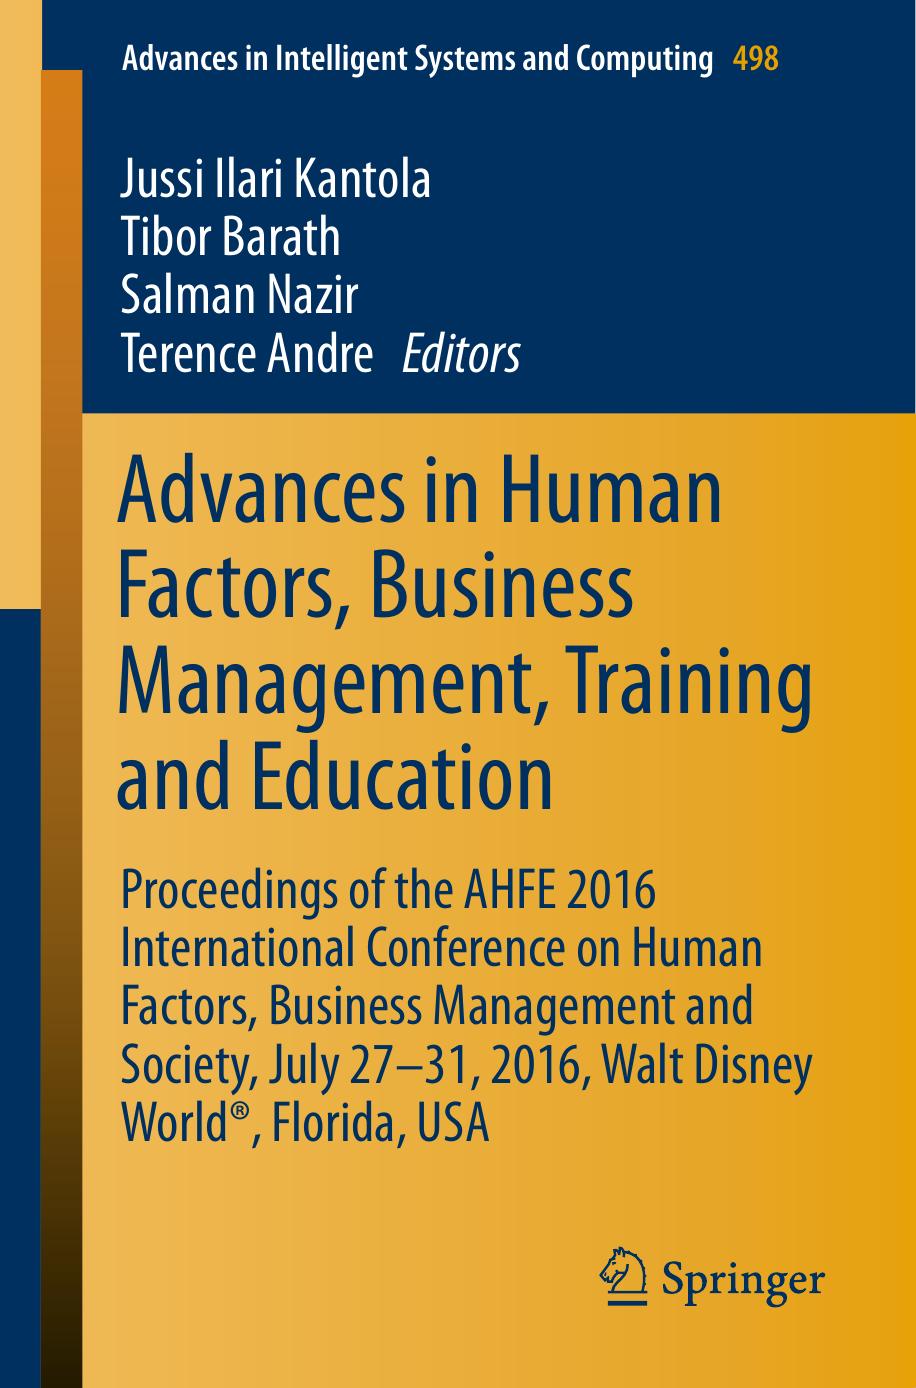 Advances in Human Factors, Business Management, Training and Education  2016.pdf